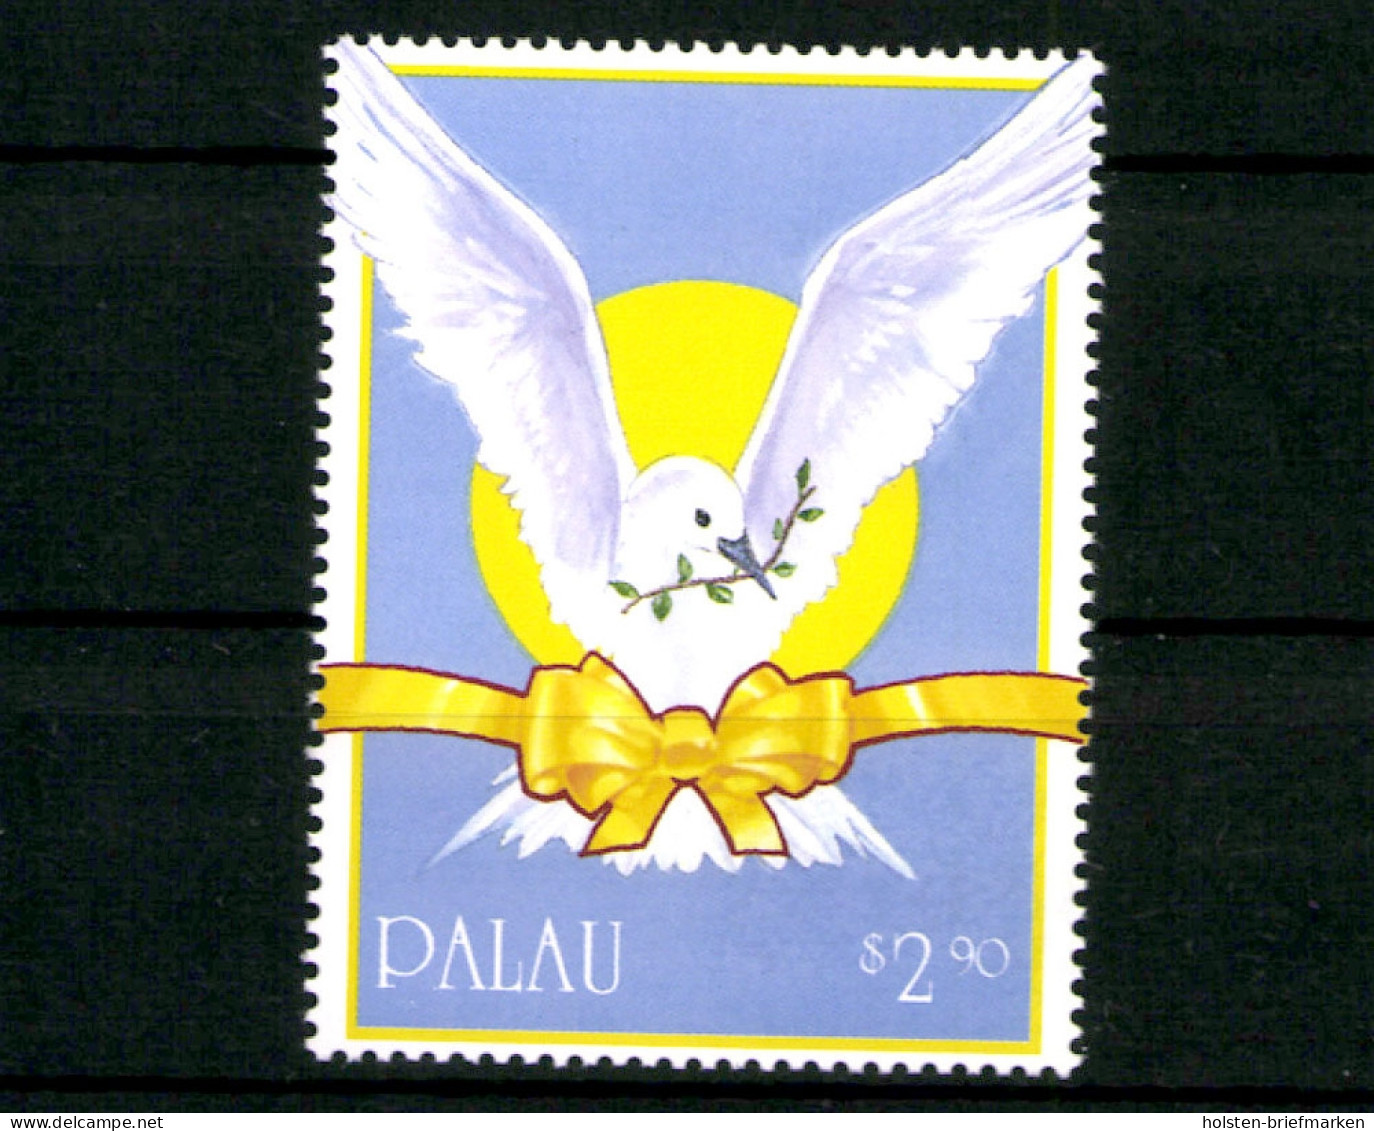 Palau, MiNr. 473, Taube, Postfrisch - Palau